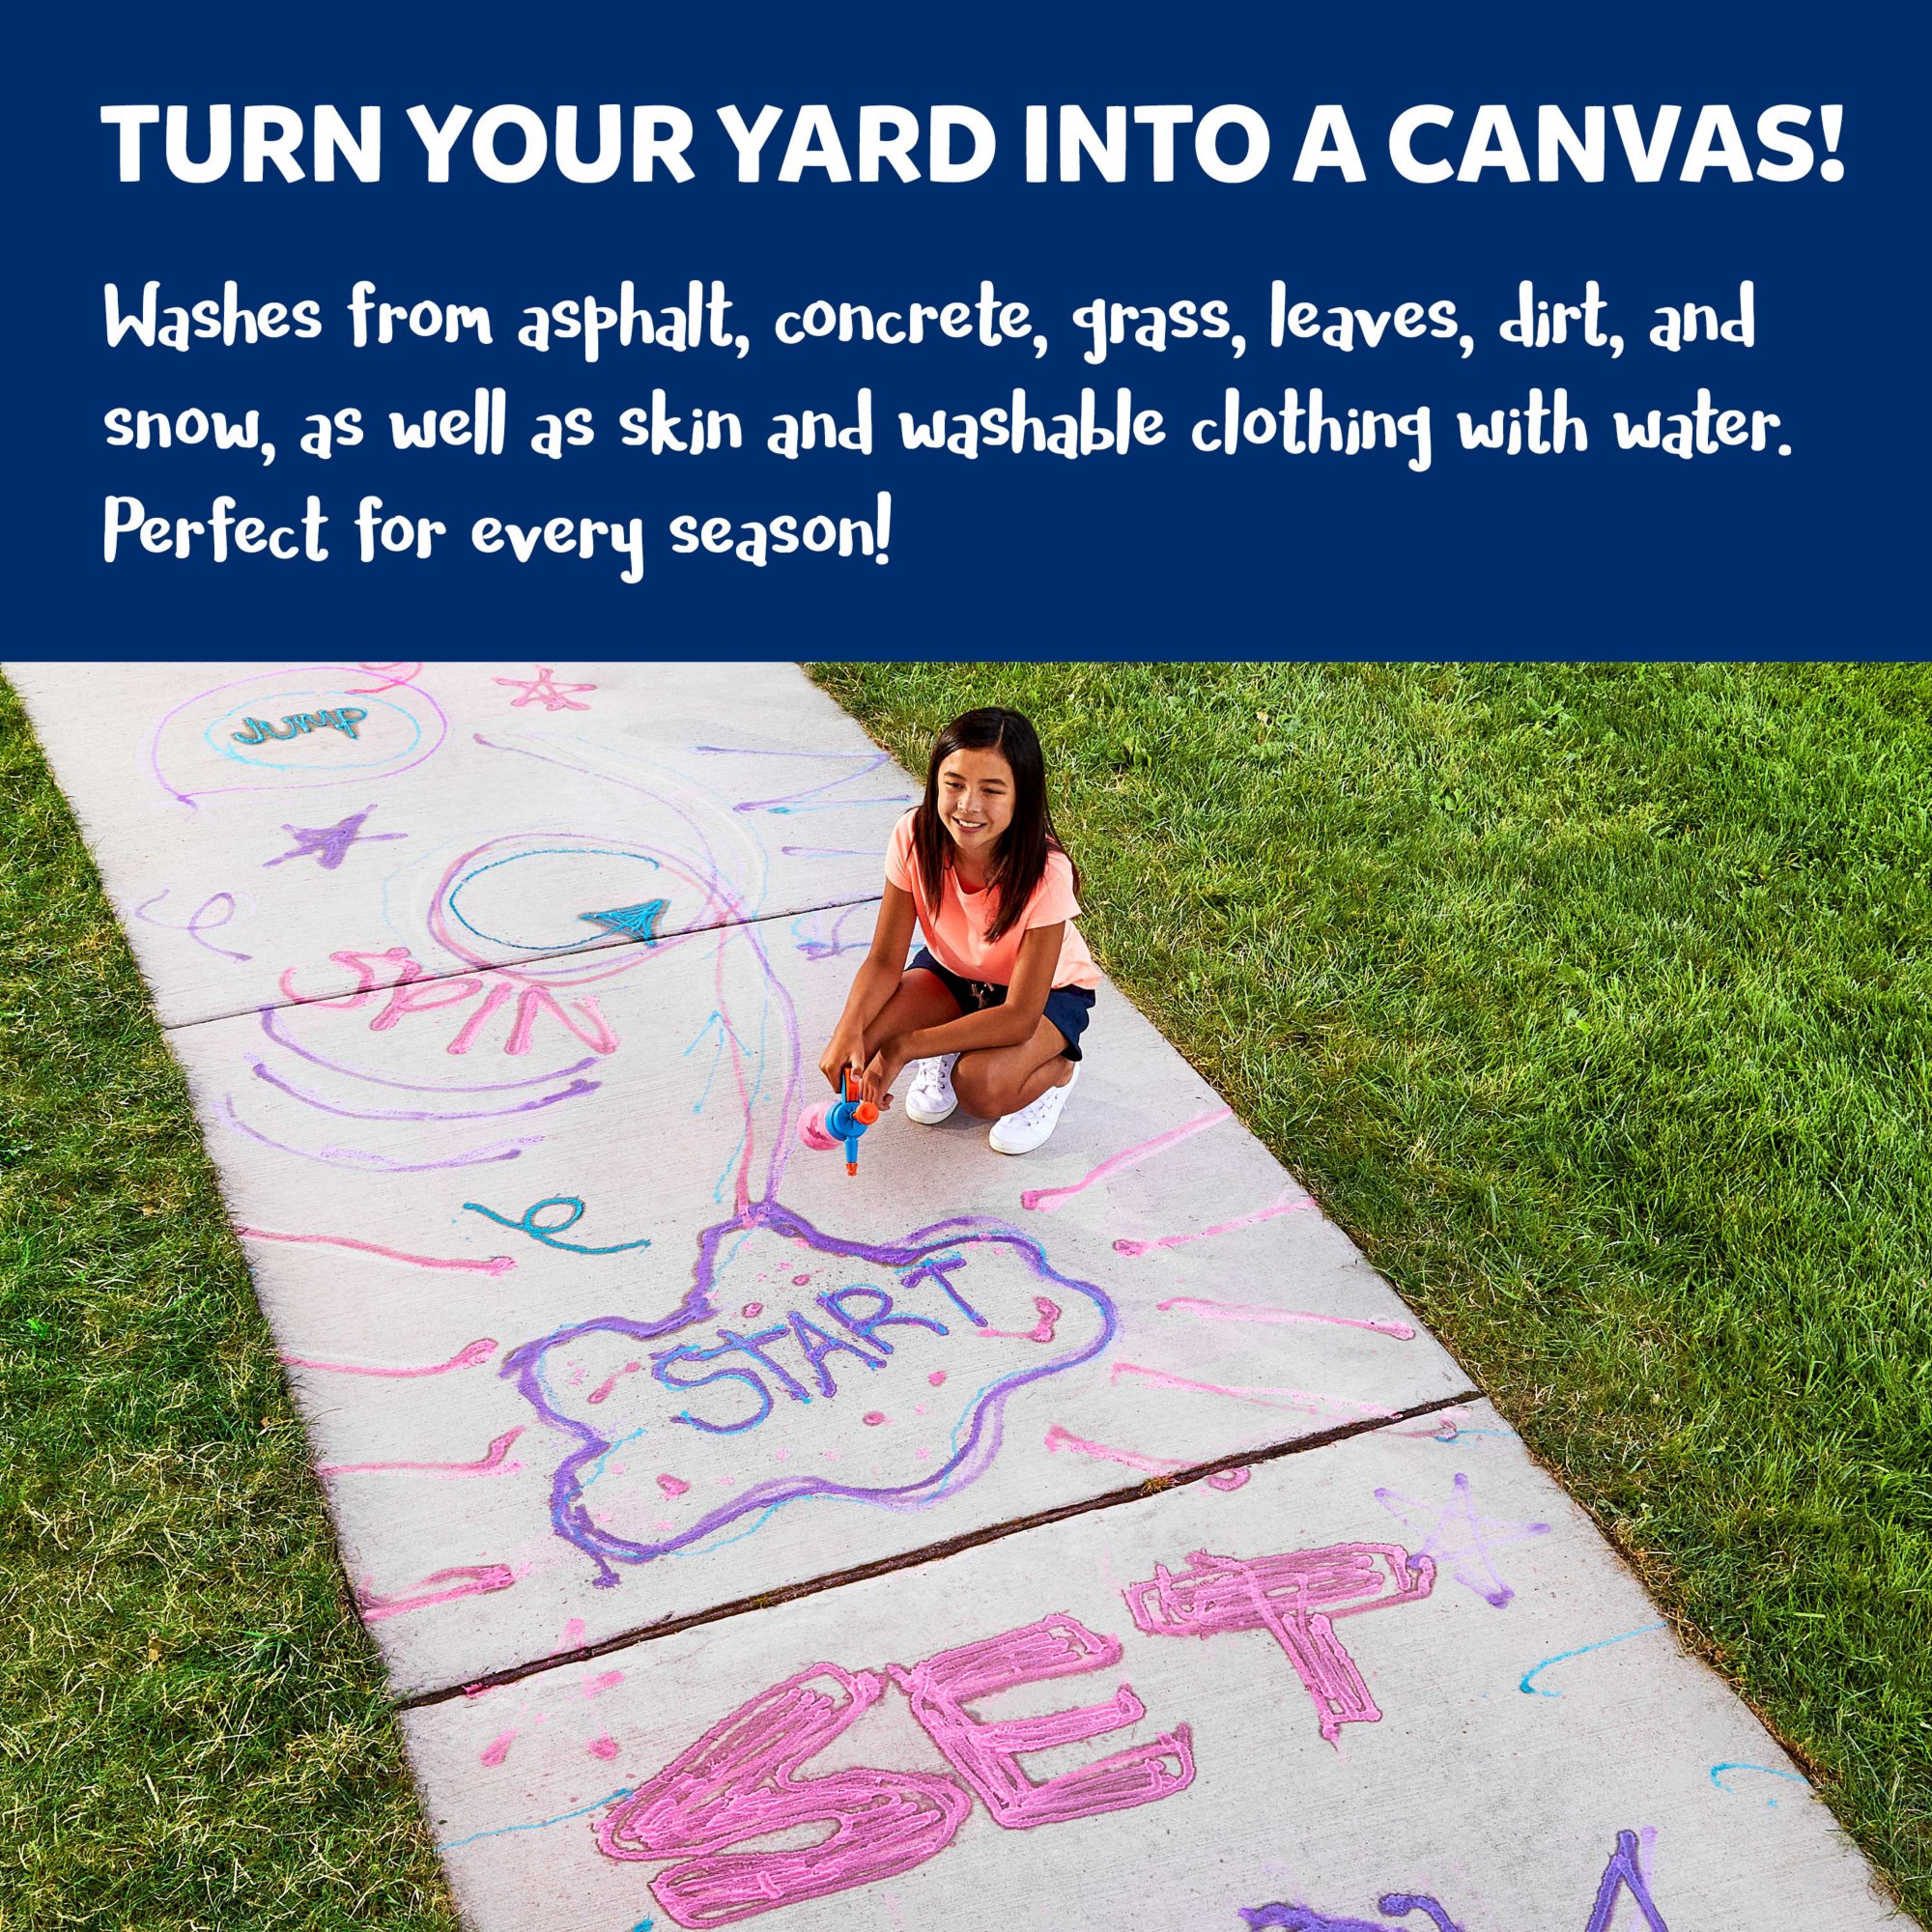 sidewalk chalk spray 4-count